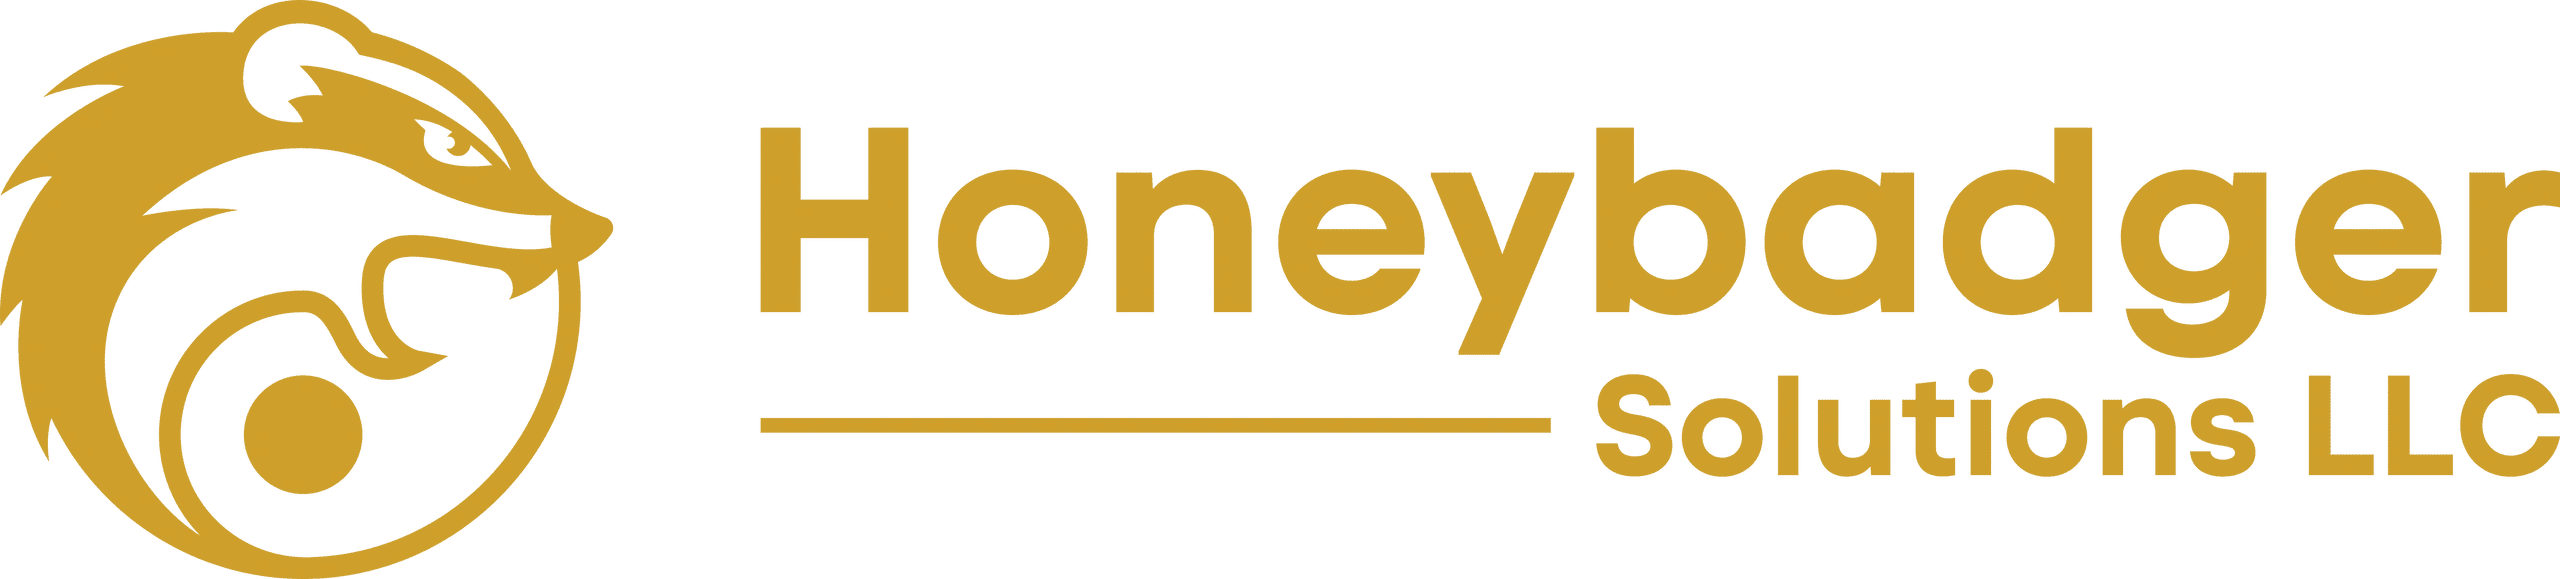 HoneyBadger Solutions